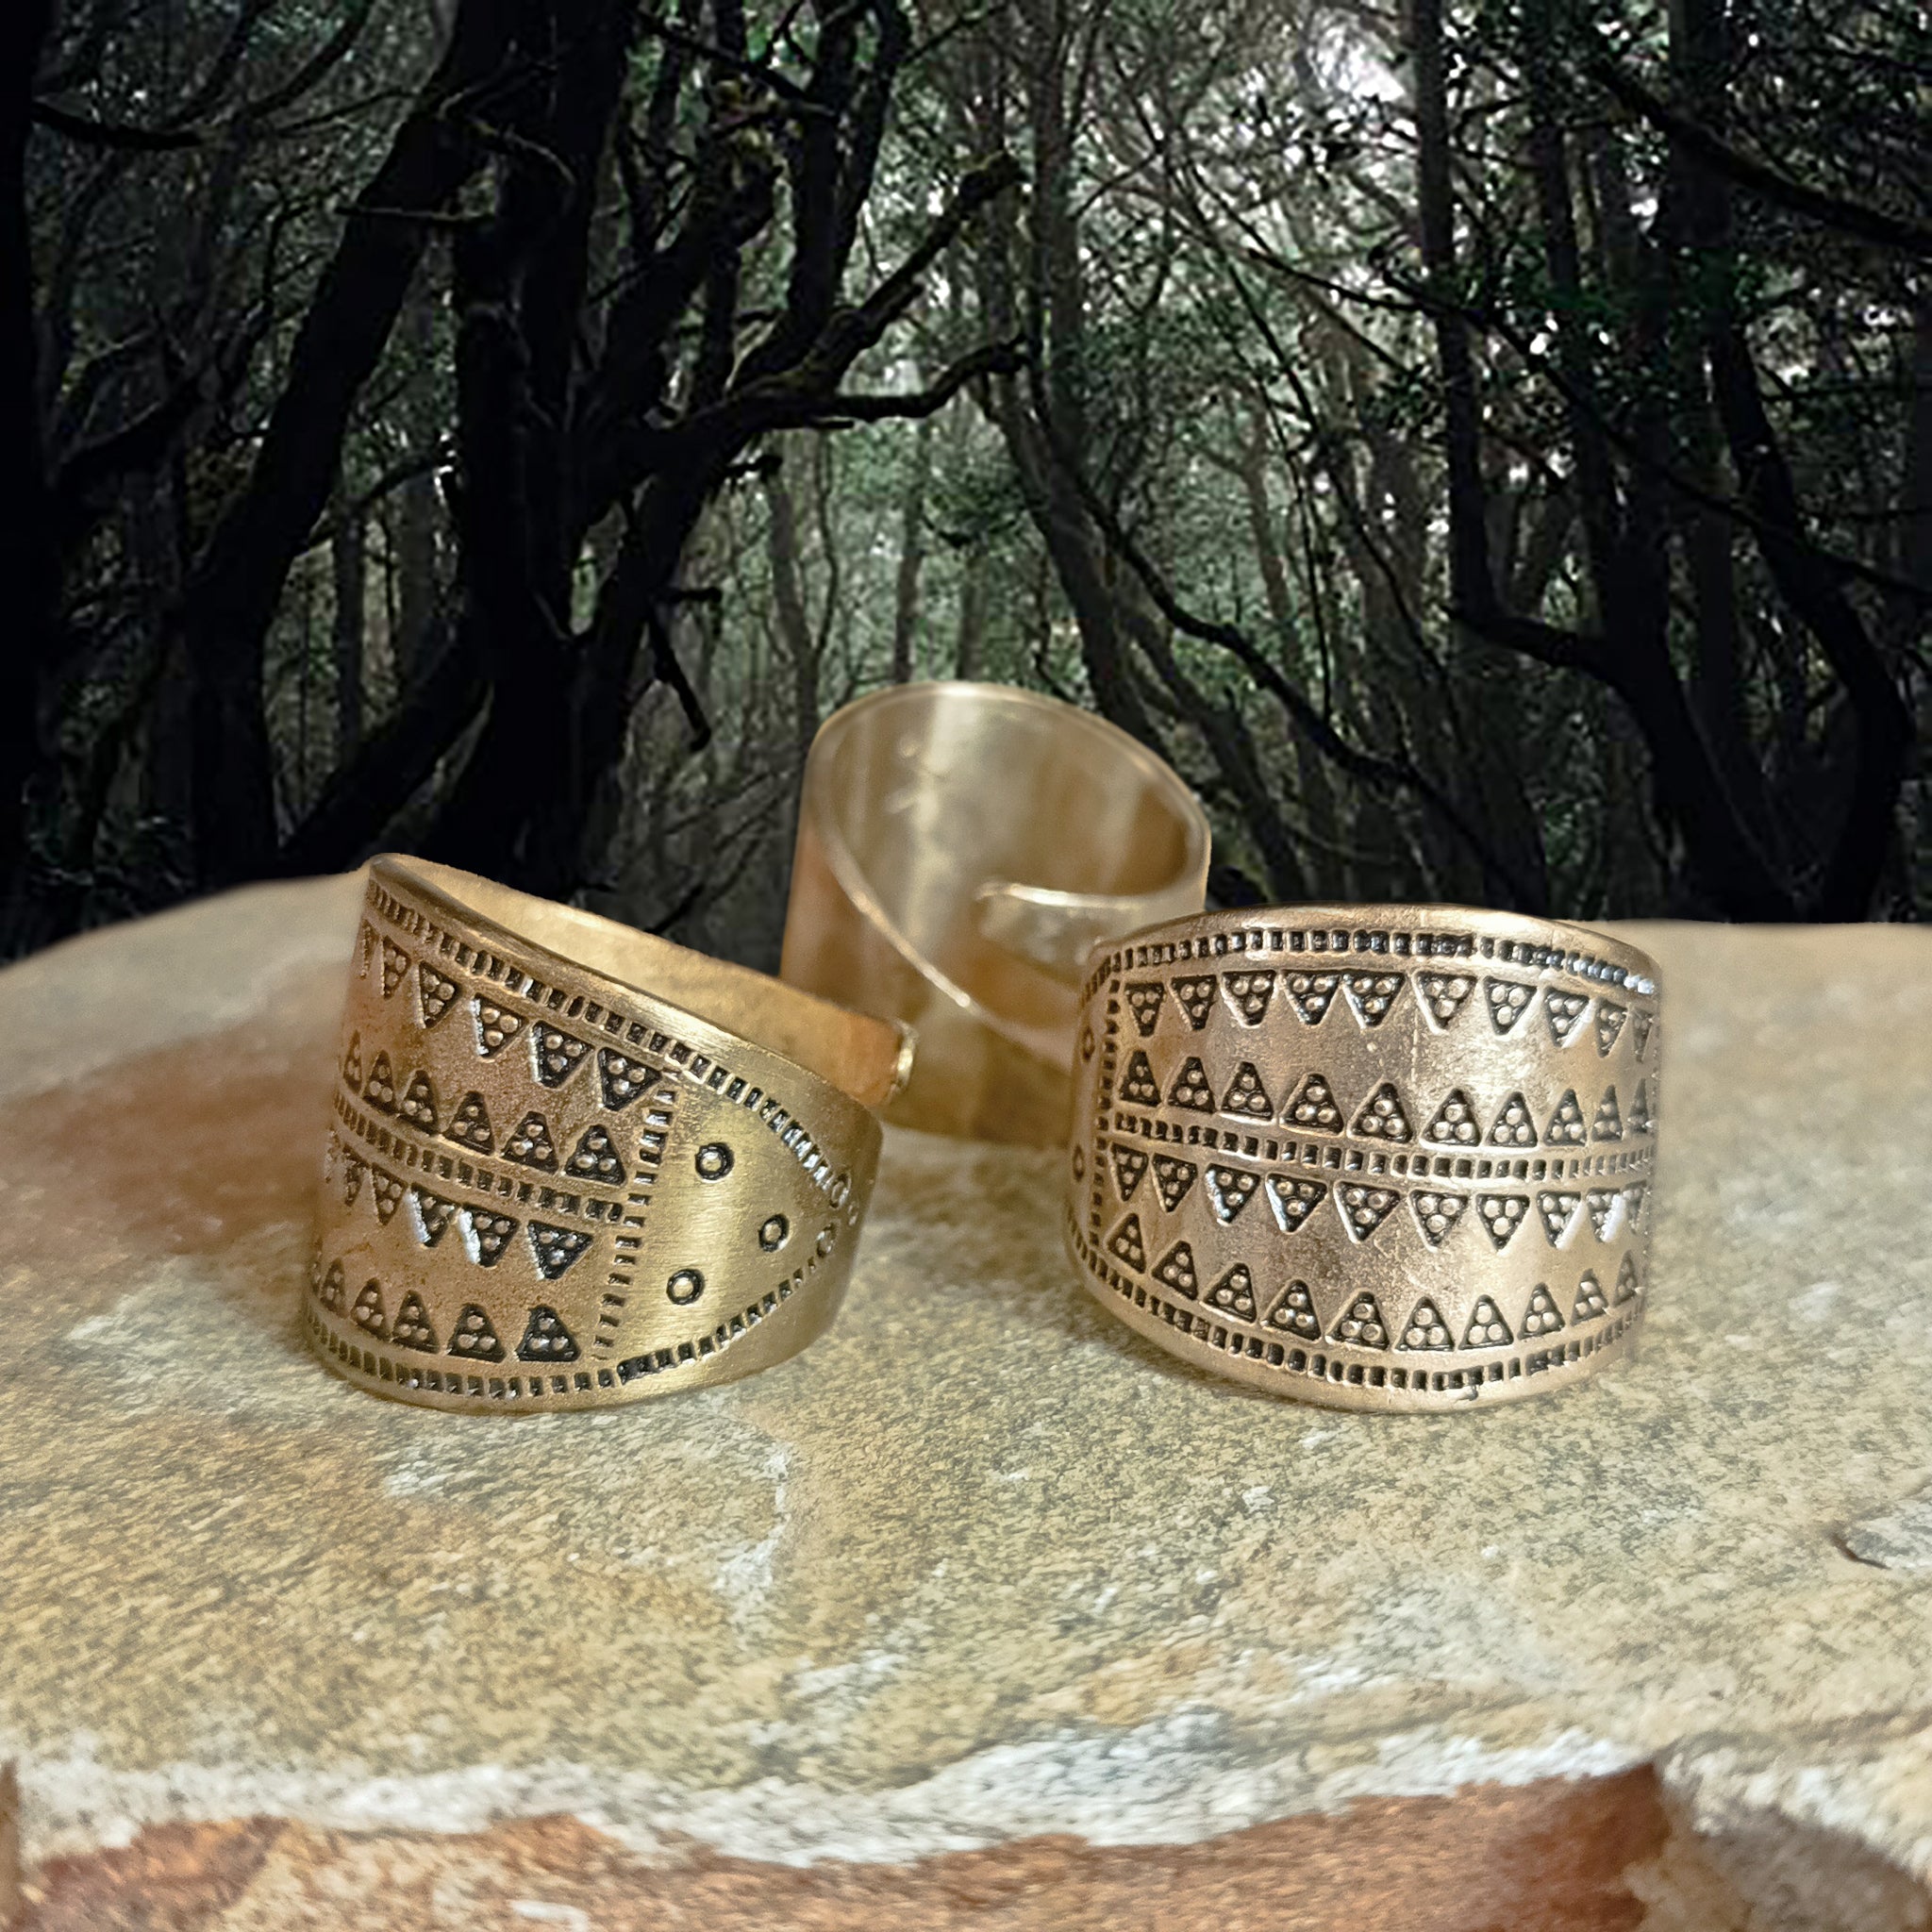 Embossed Bronze Replica Viking Ring